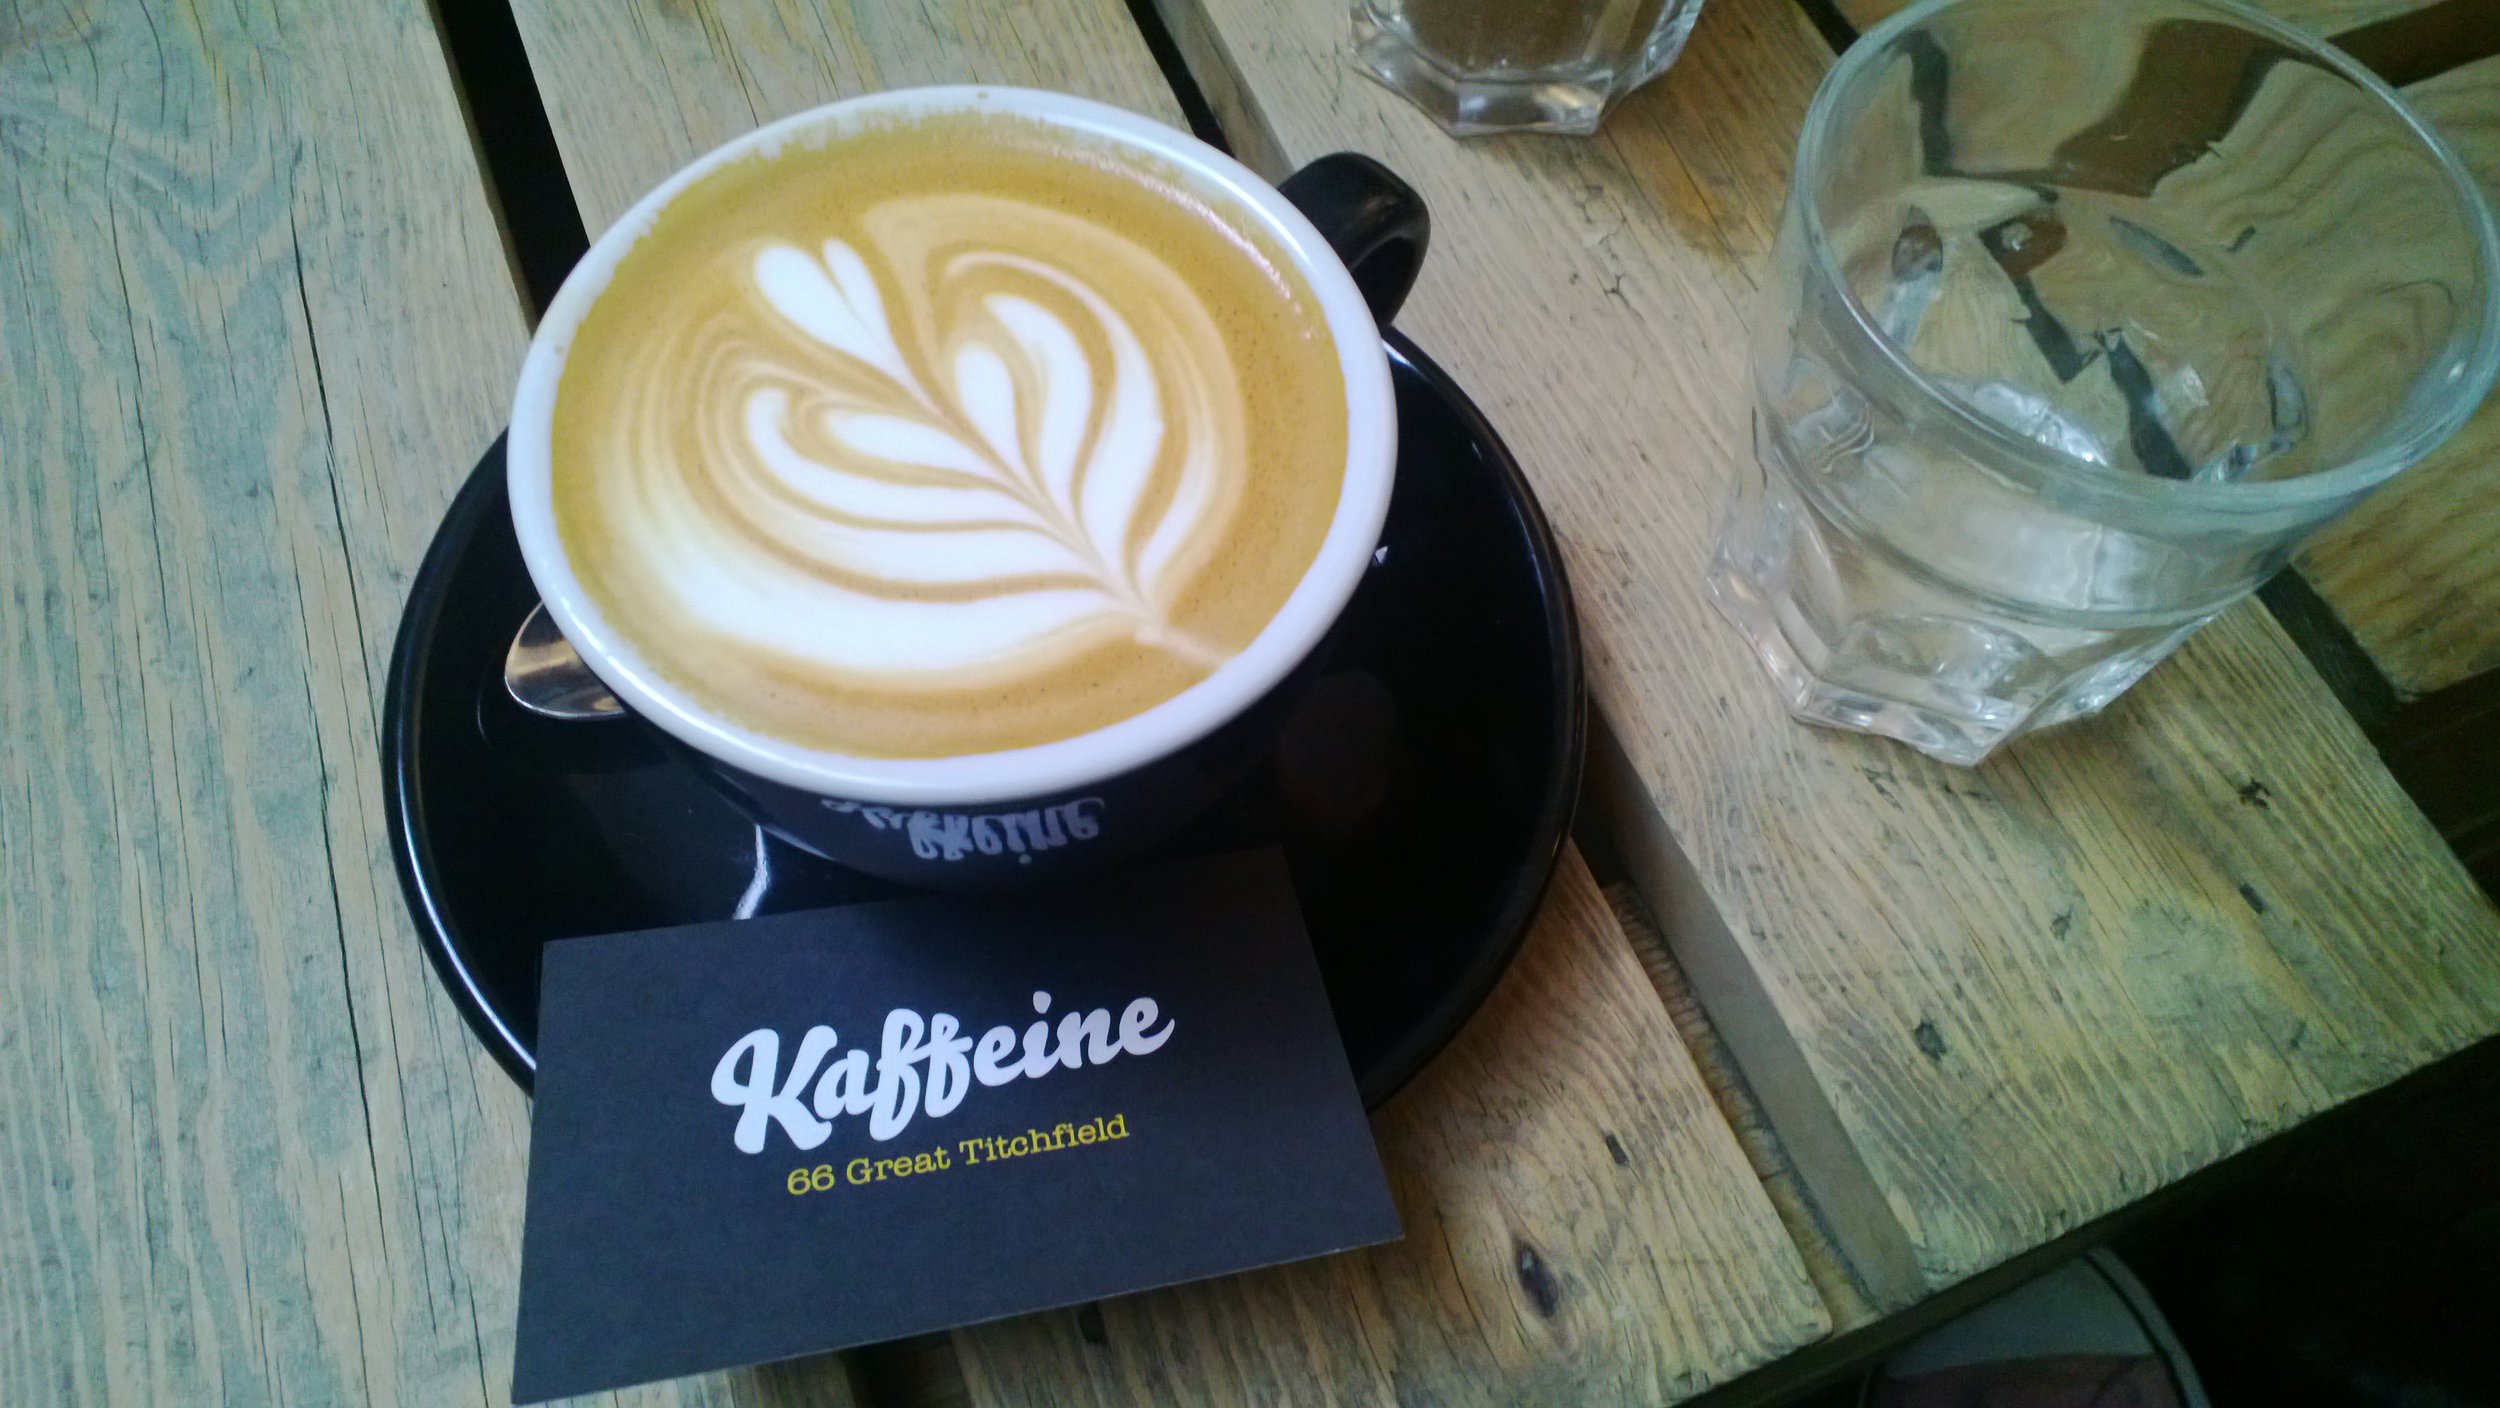 Kaffeine London